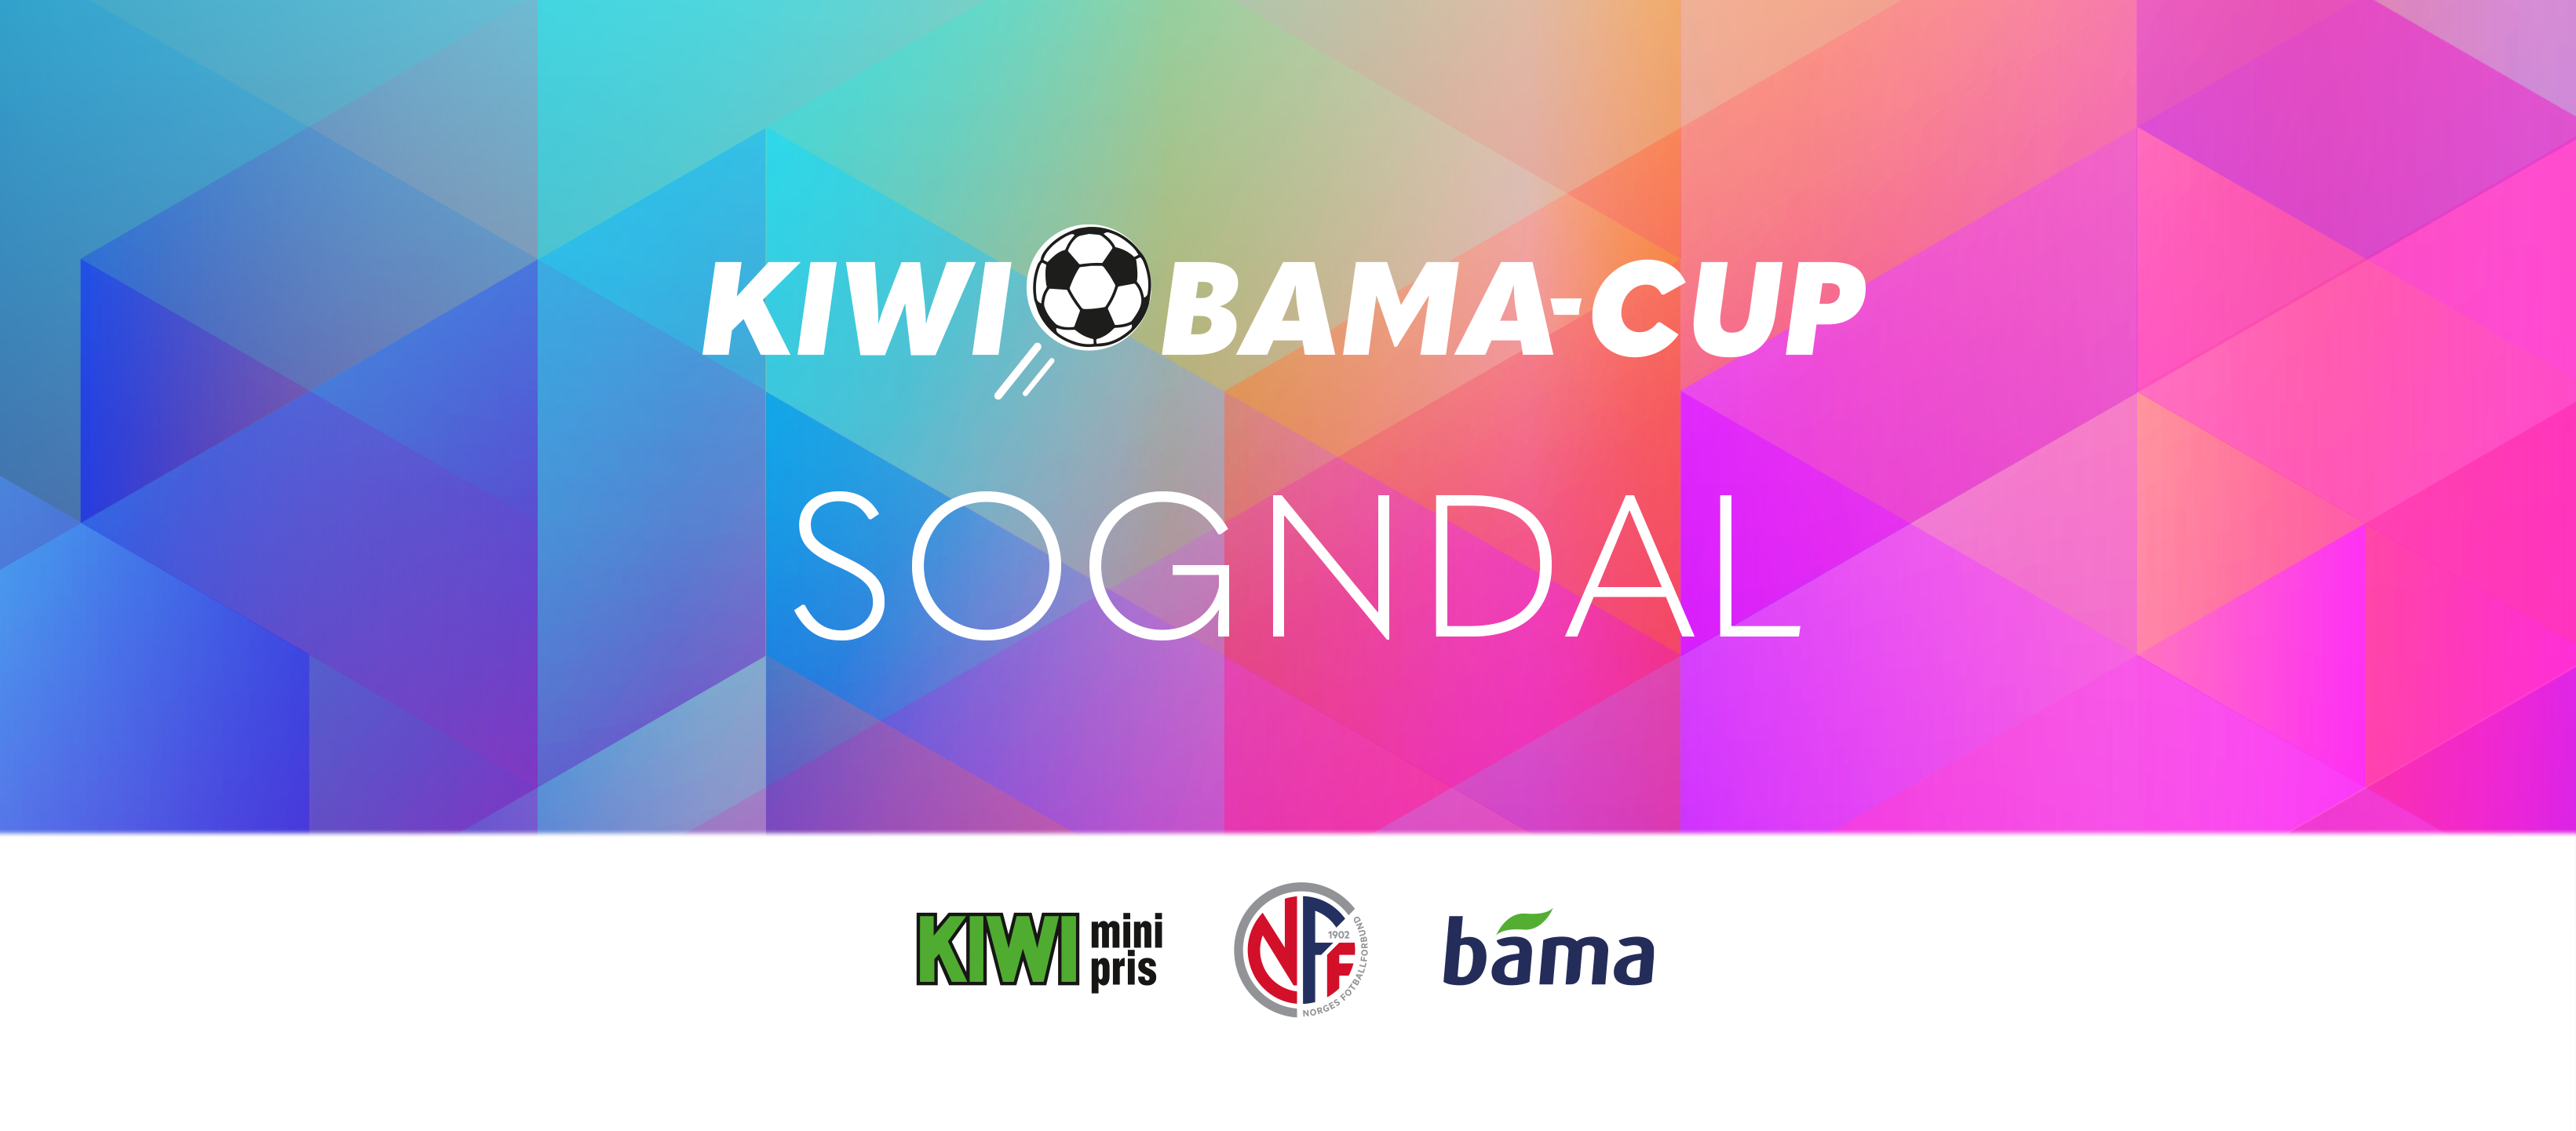 FB-BANNER KIWI-BAMA-Cup - Sogndal.png